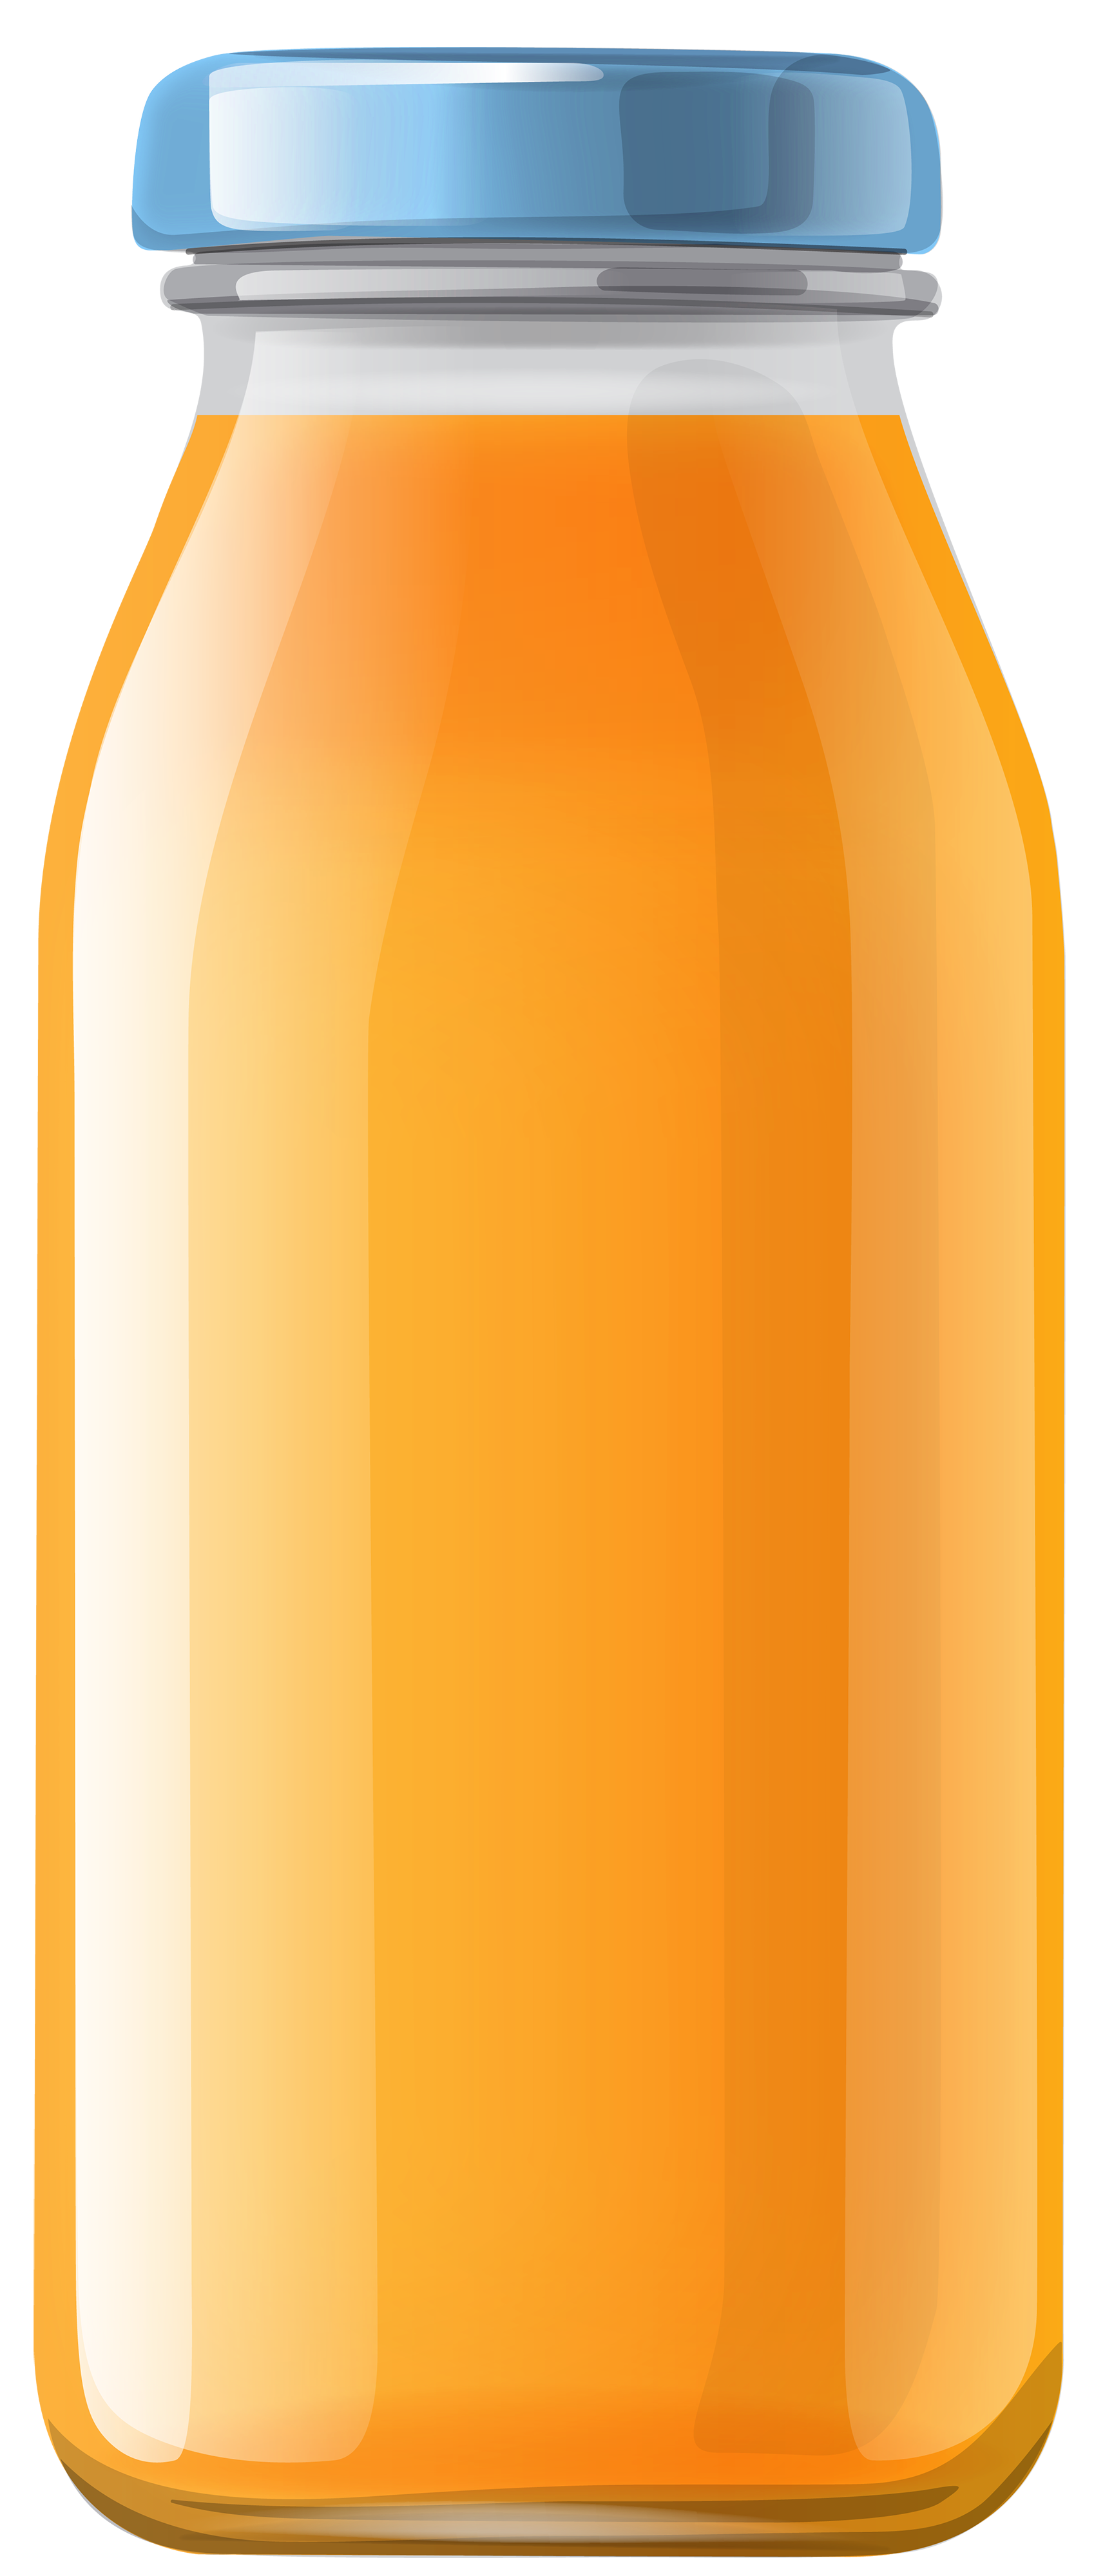 Orange juice bottle.